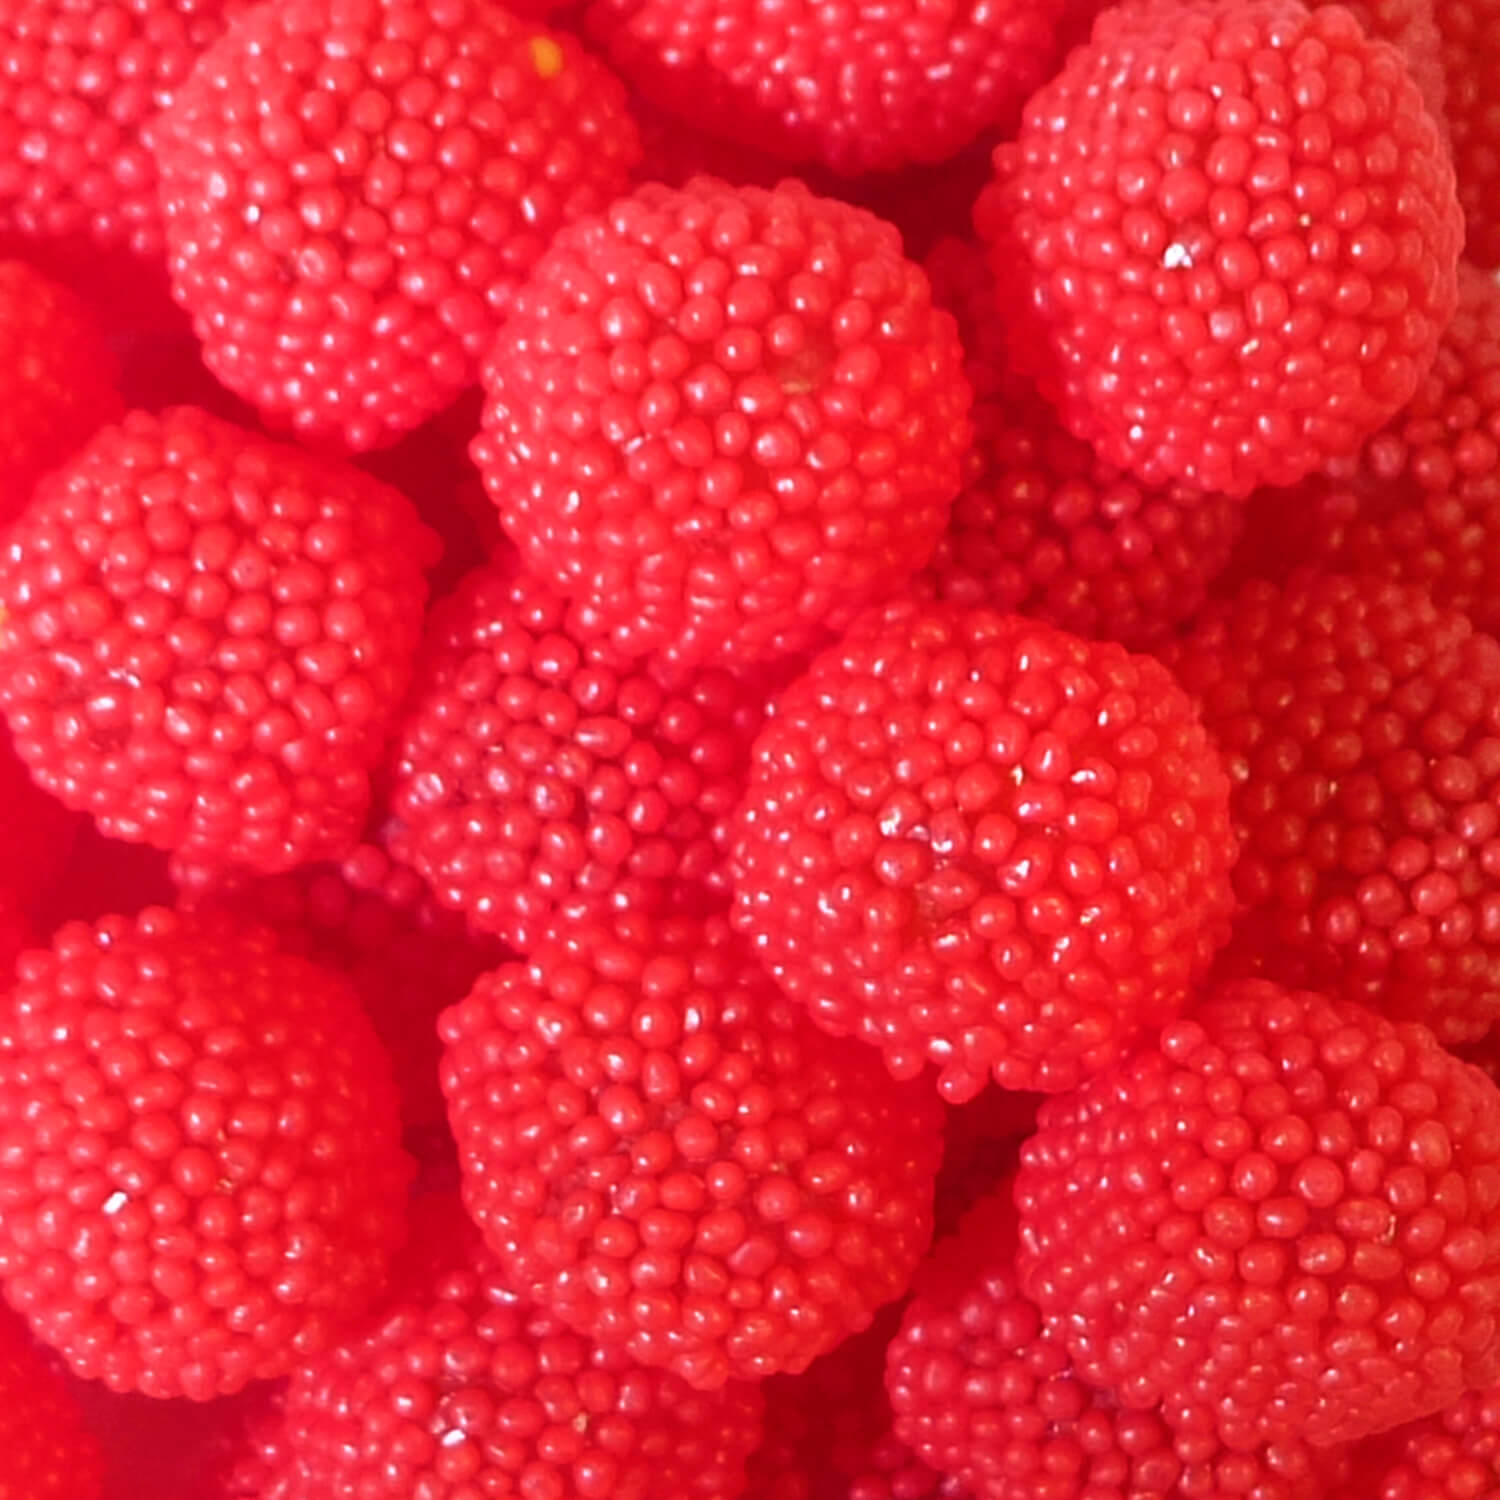 Lunar strawberries